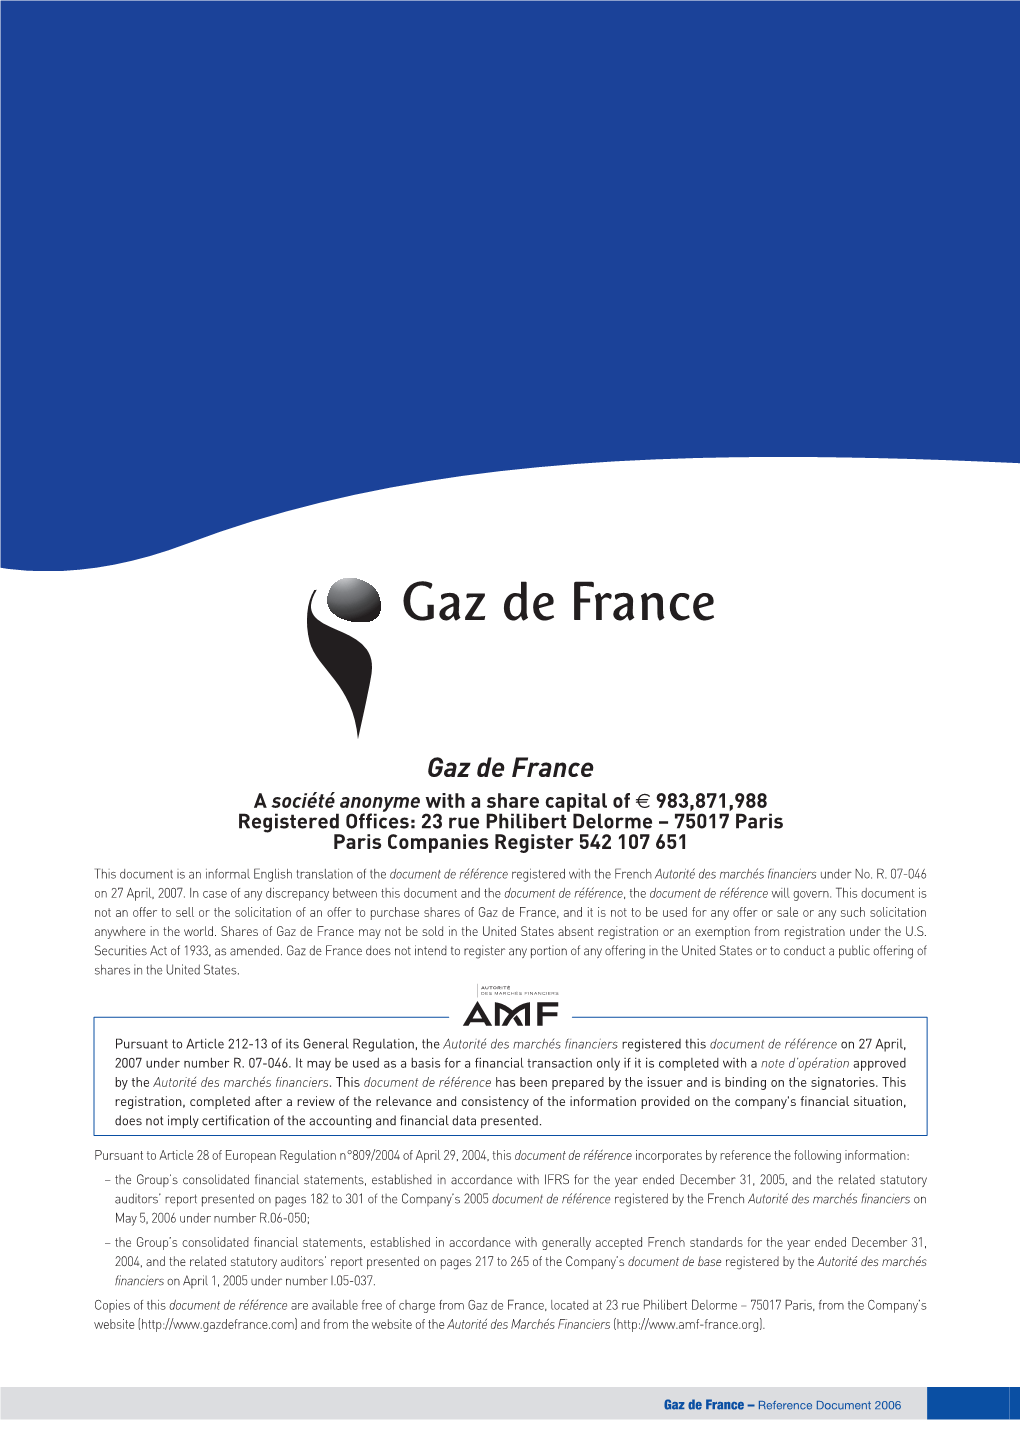 Gaz De France 2006 Reference Document